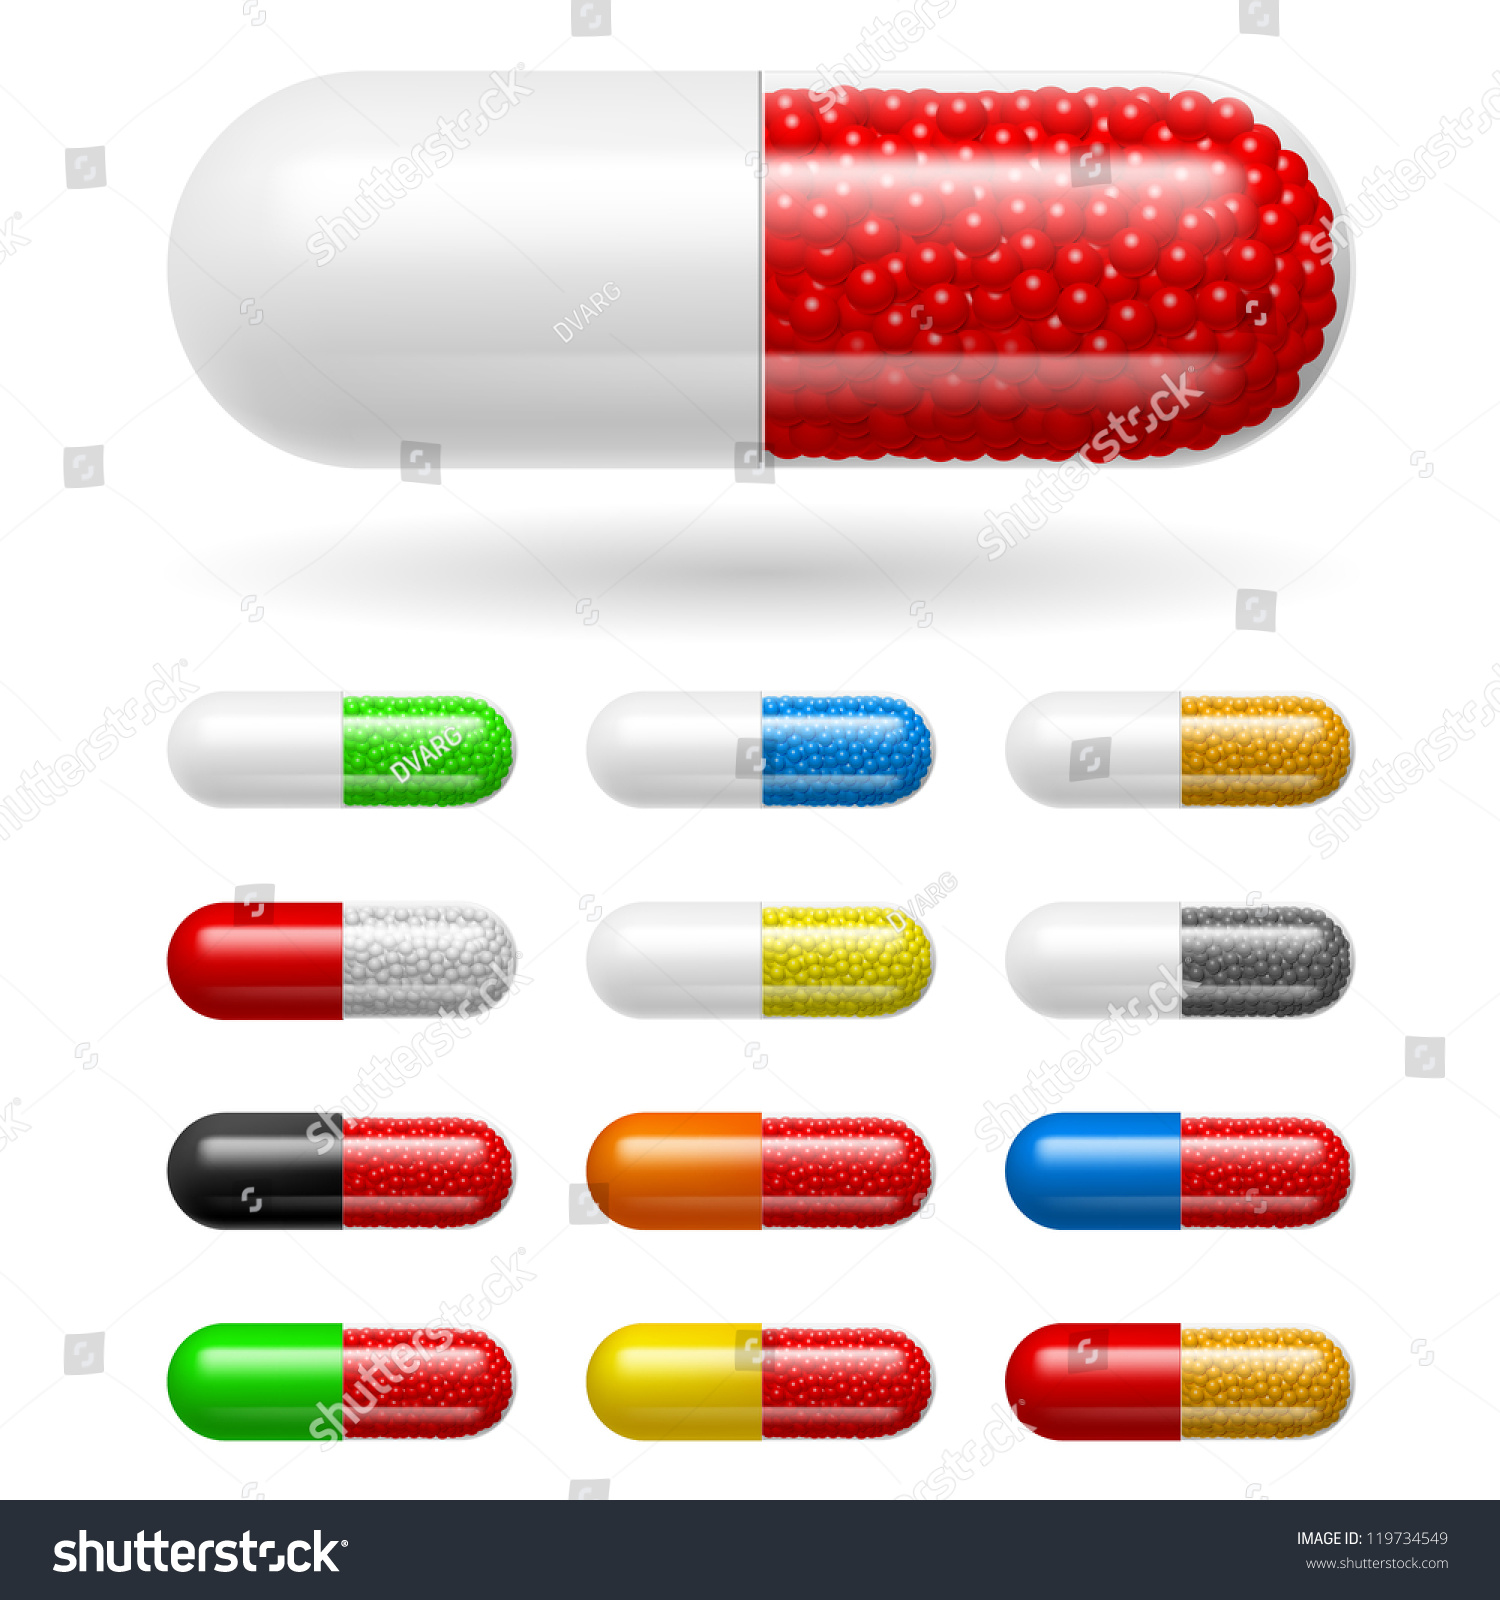 Raster Version Different Medical Tablets Illustration Stock ...